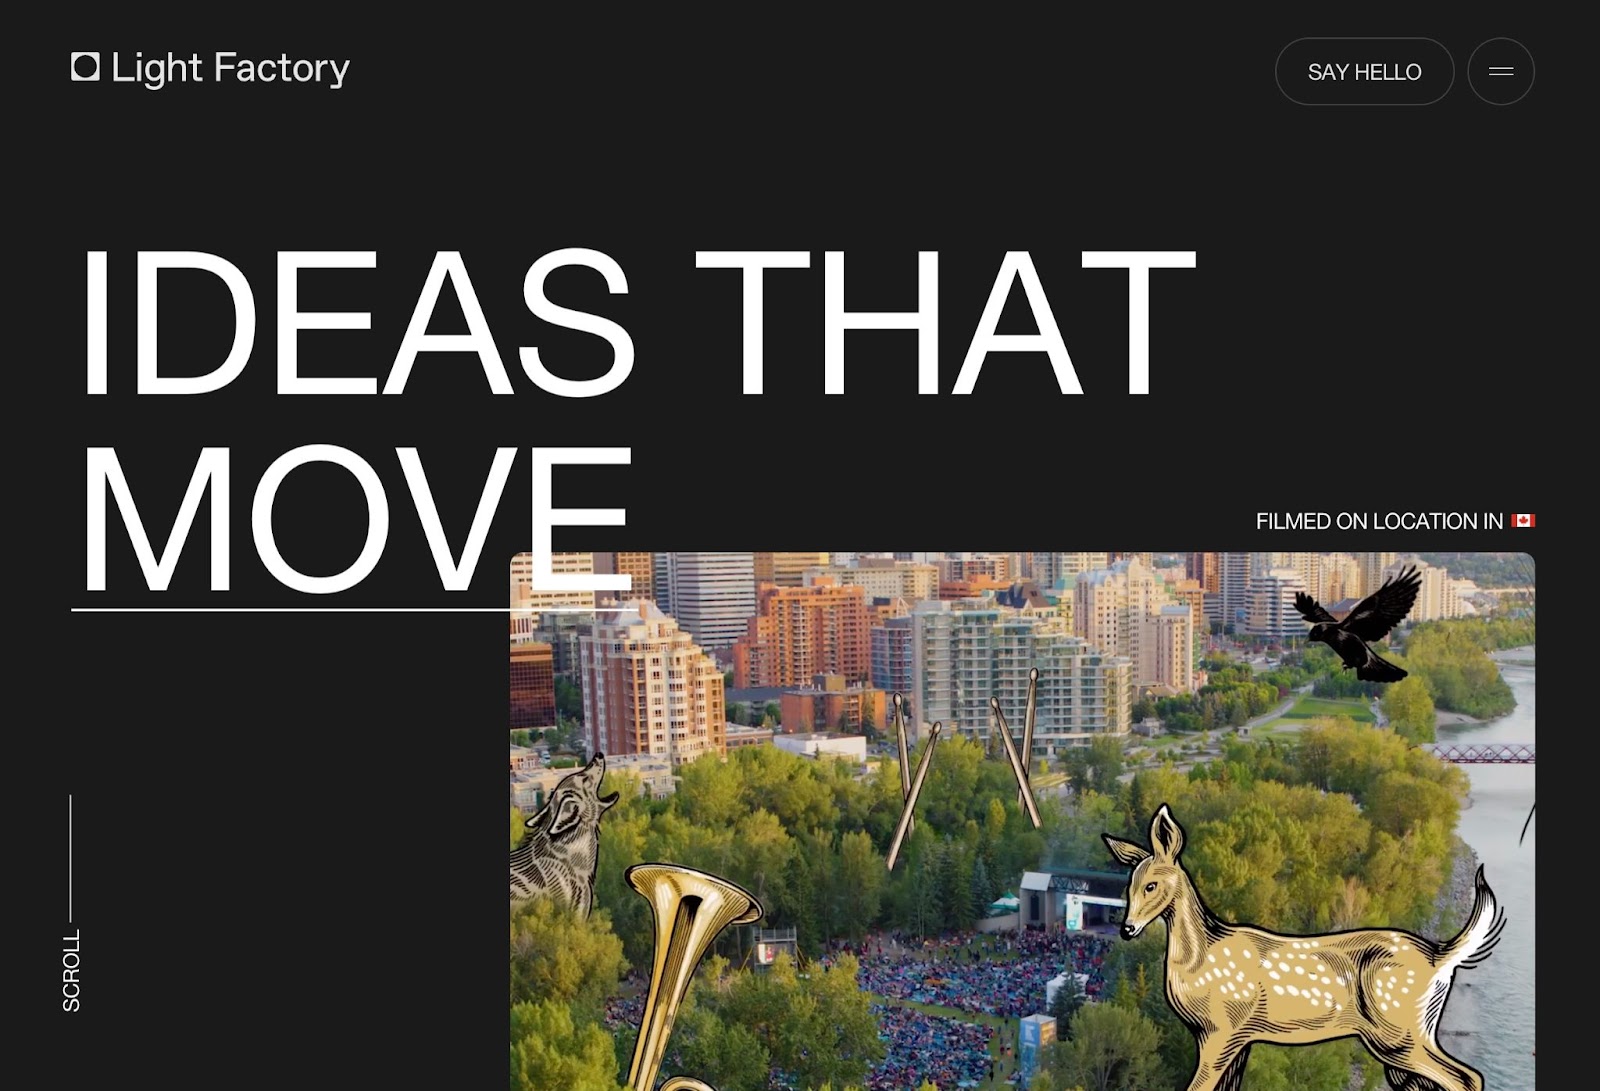 Light Factory 的全黑网站标题带有大写的白色文字，上面写着“IDEAS THT MOVE”，上面是多伦多的鸟瞰图，城市图像上有角和鹿的插图。